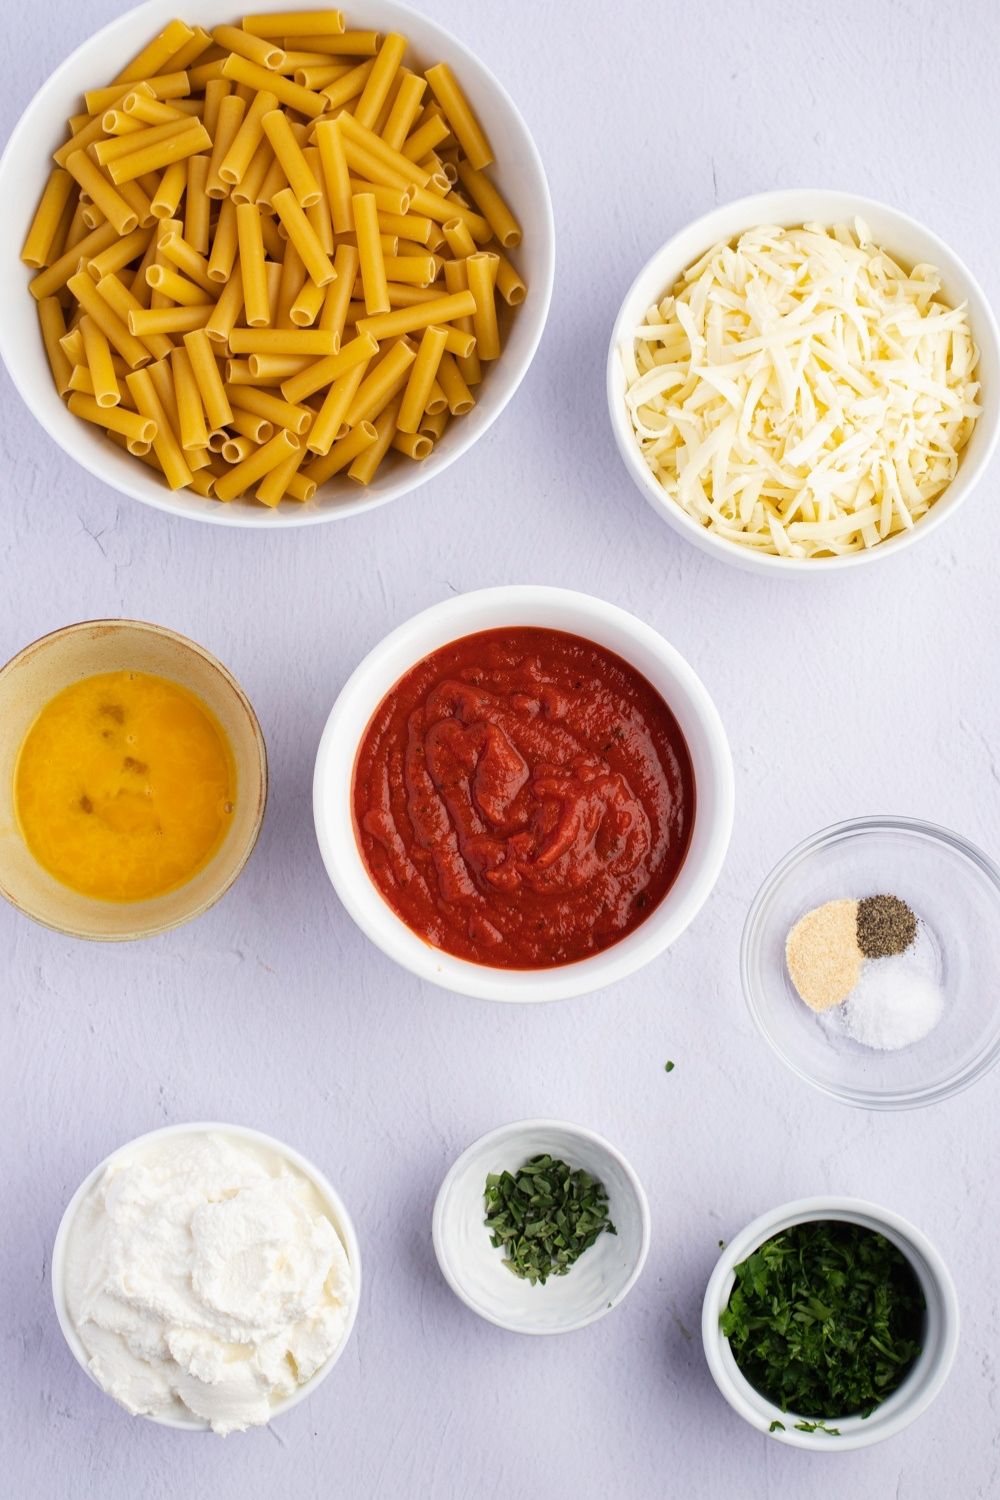 Meatless Baked Ziti Ingredients: Ziti, Pasta Sauce, Ricotta, Mozzarella, Parmesan, Egg, Parsely, Oregano and Garlic Powder